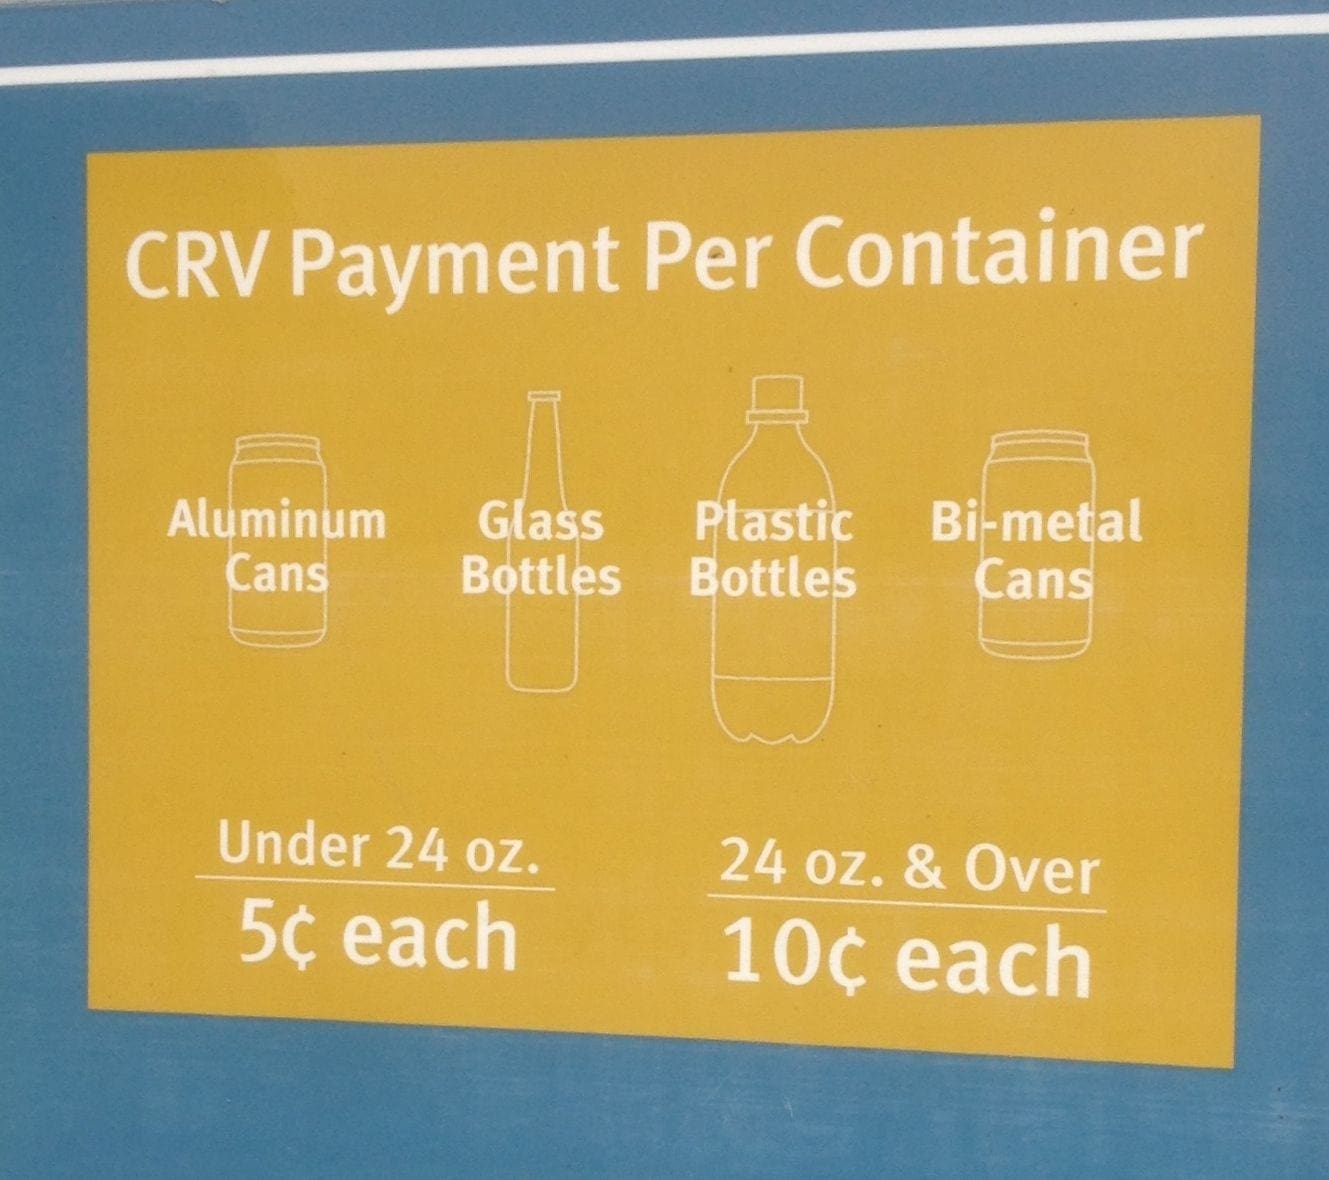 CRV amounts